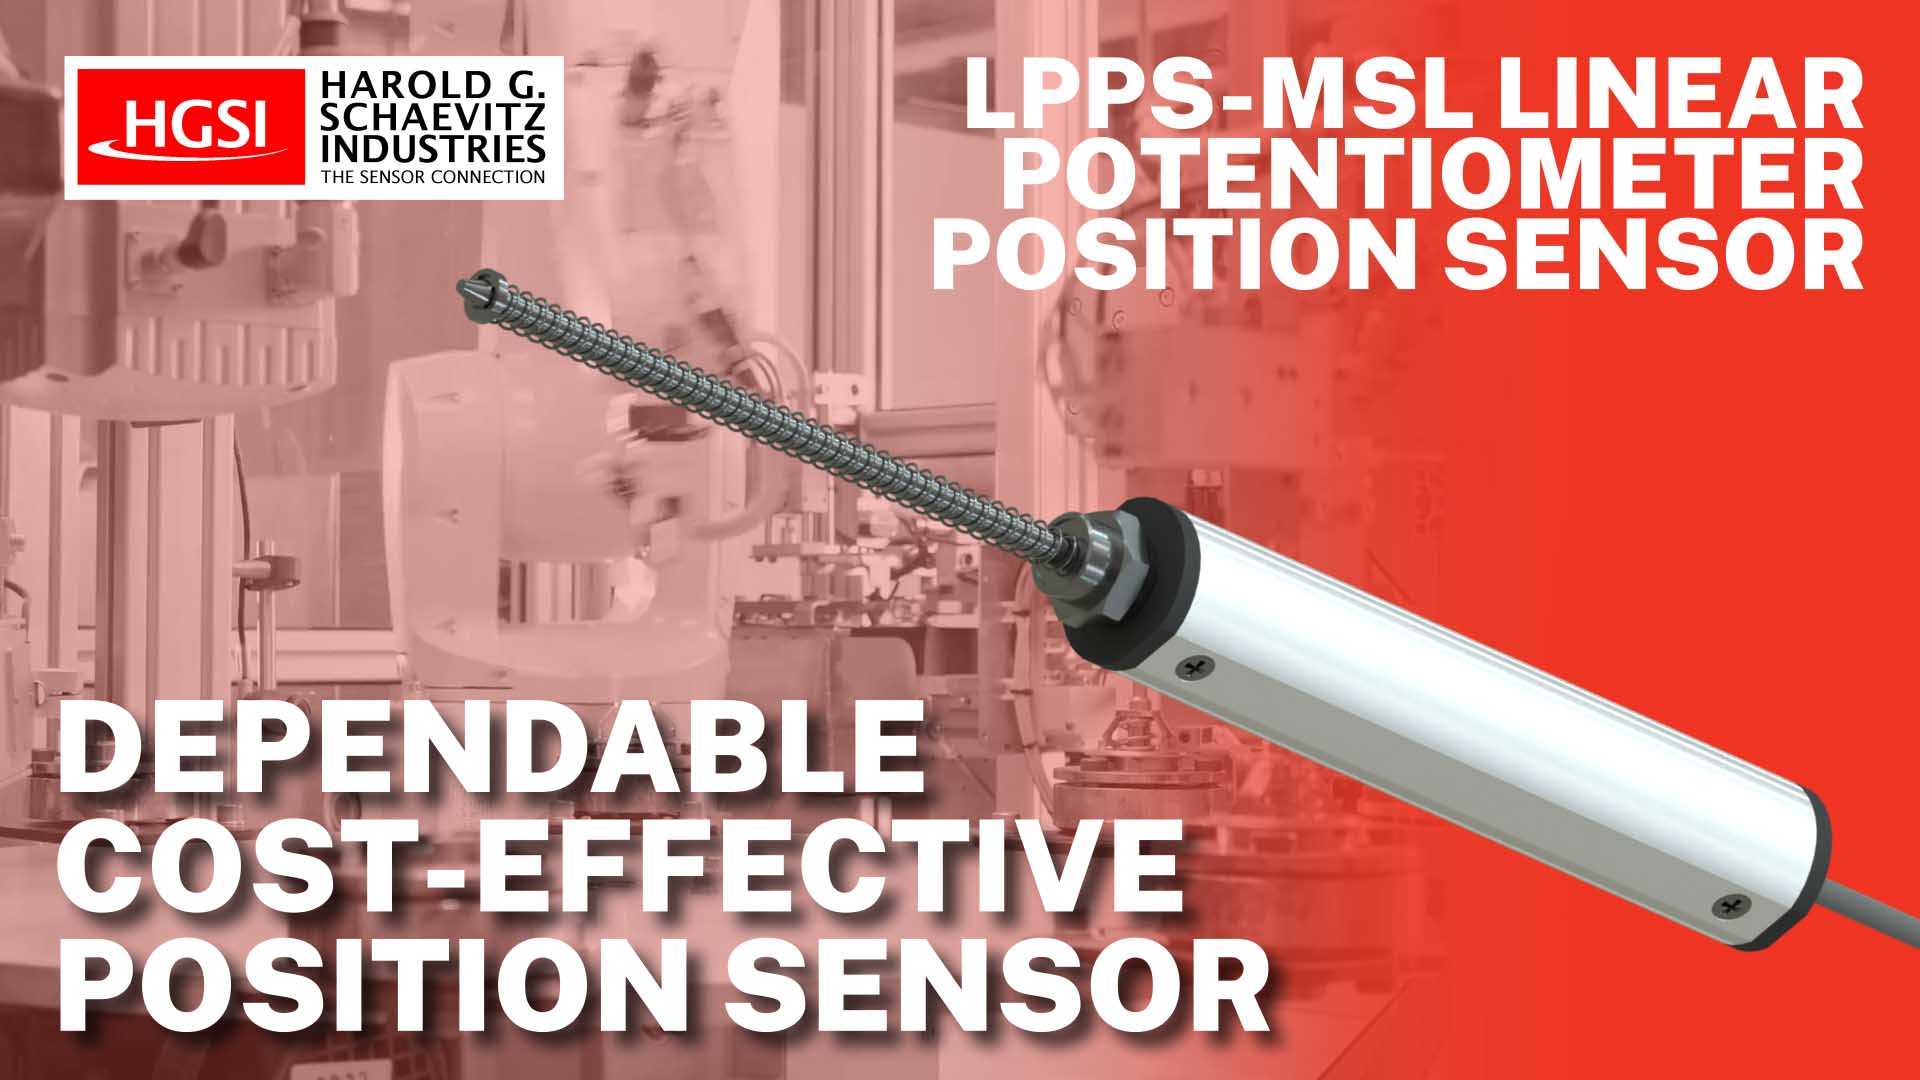 Overview of LPPS-MSL Series Linear Potentiometer Position Sensor